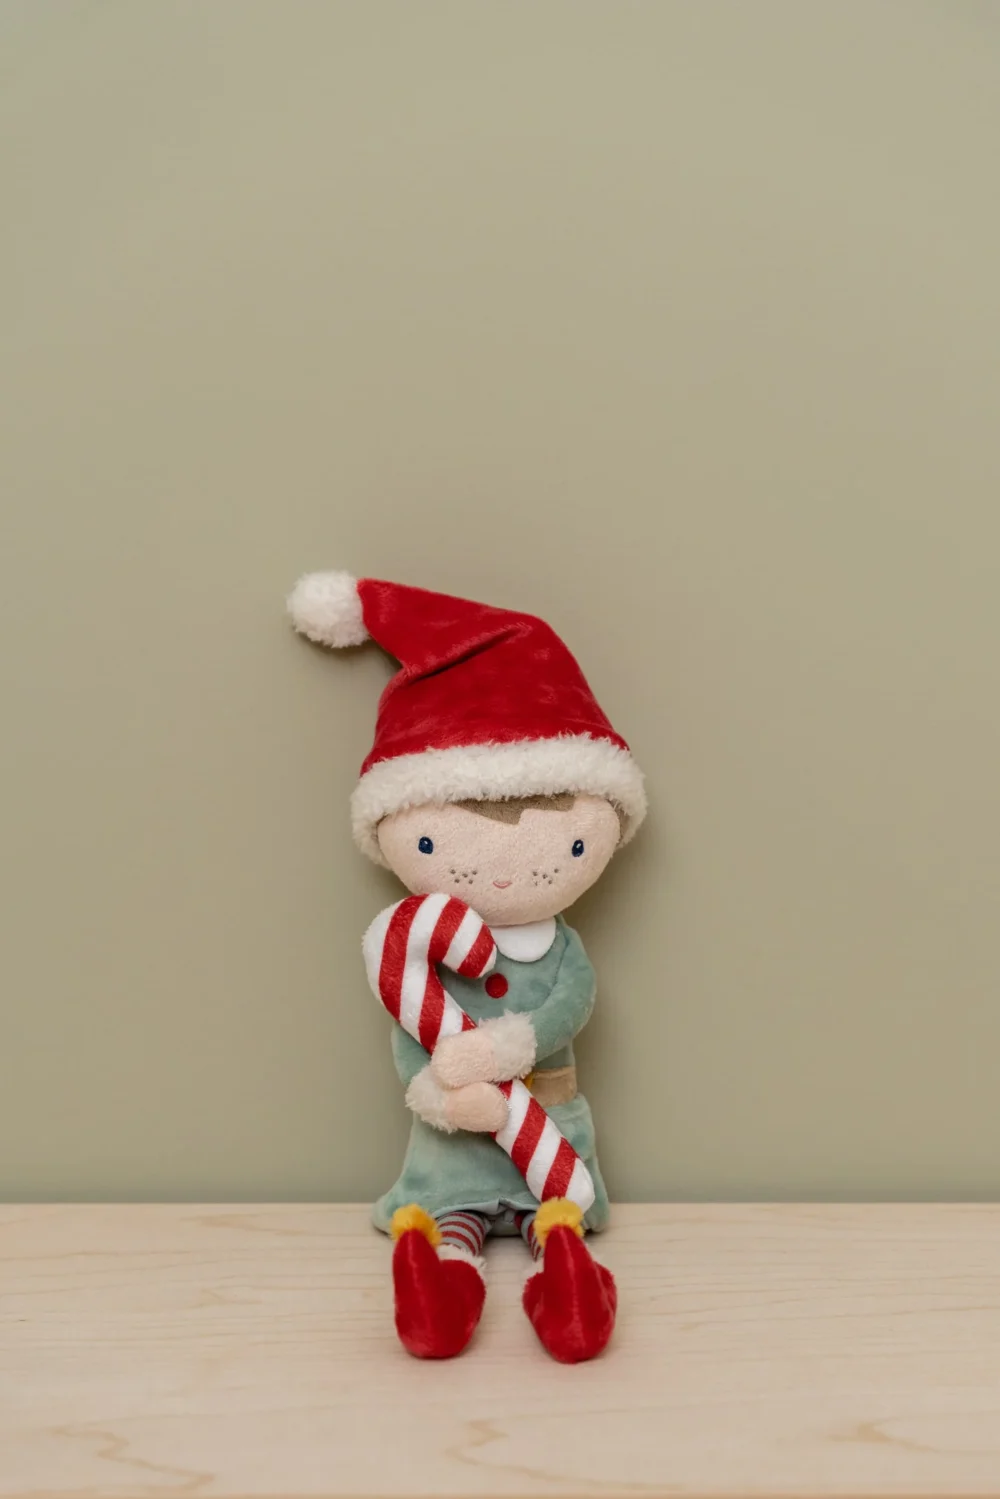 LITTLE DUTCH. Κούκλα Χριστουγεννιάτικη Jim (35 εκ.)